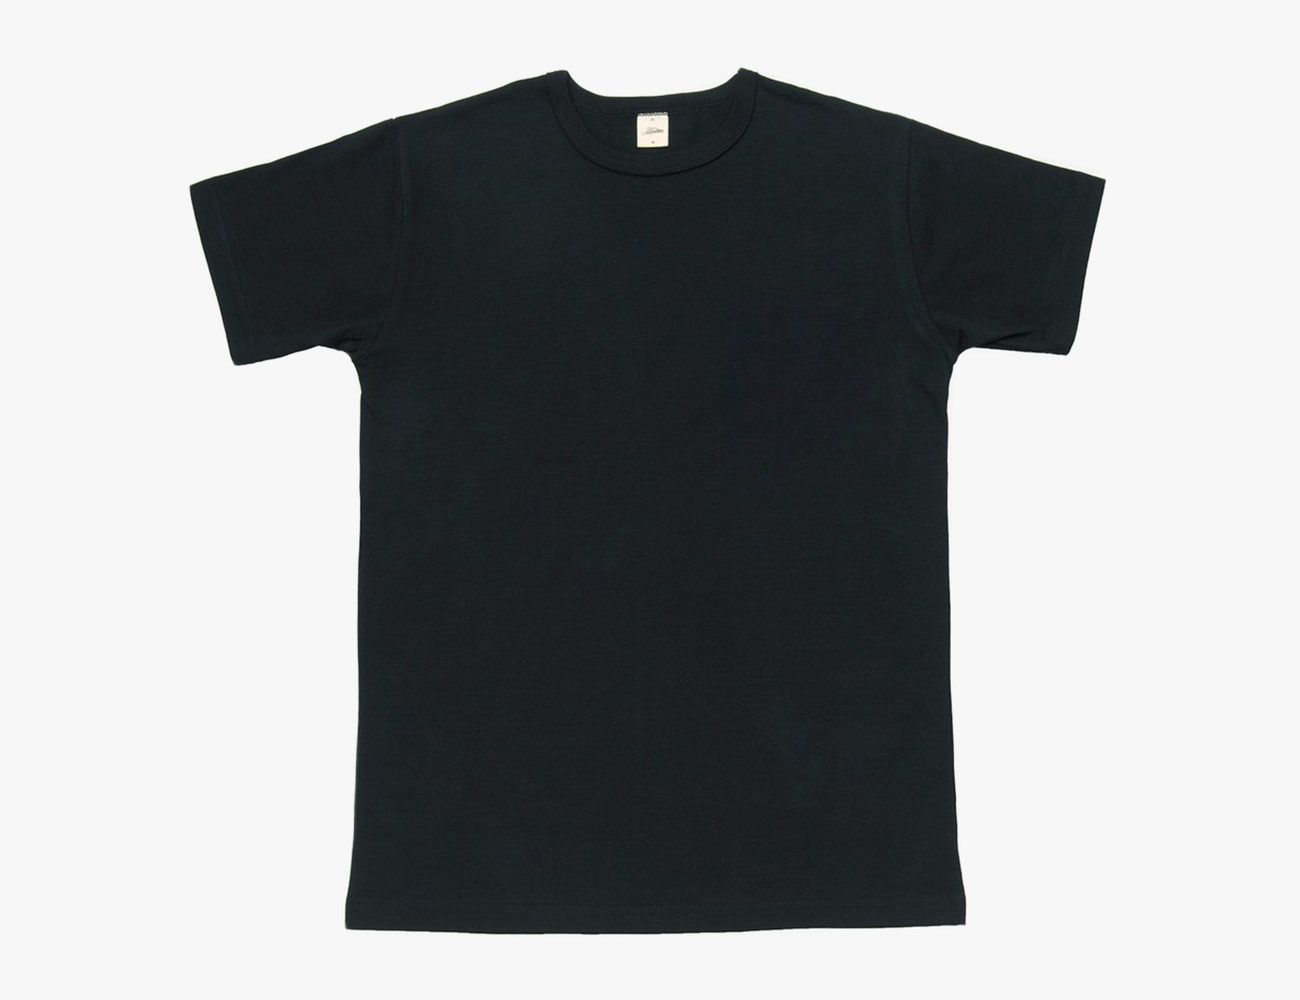 Buy black print on black t shirt - OFF 68%